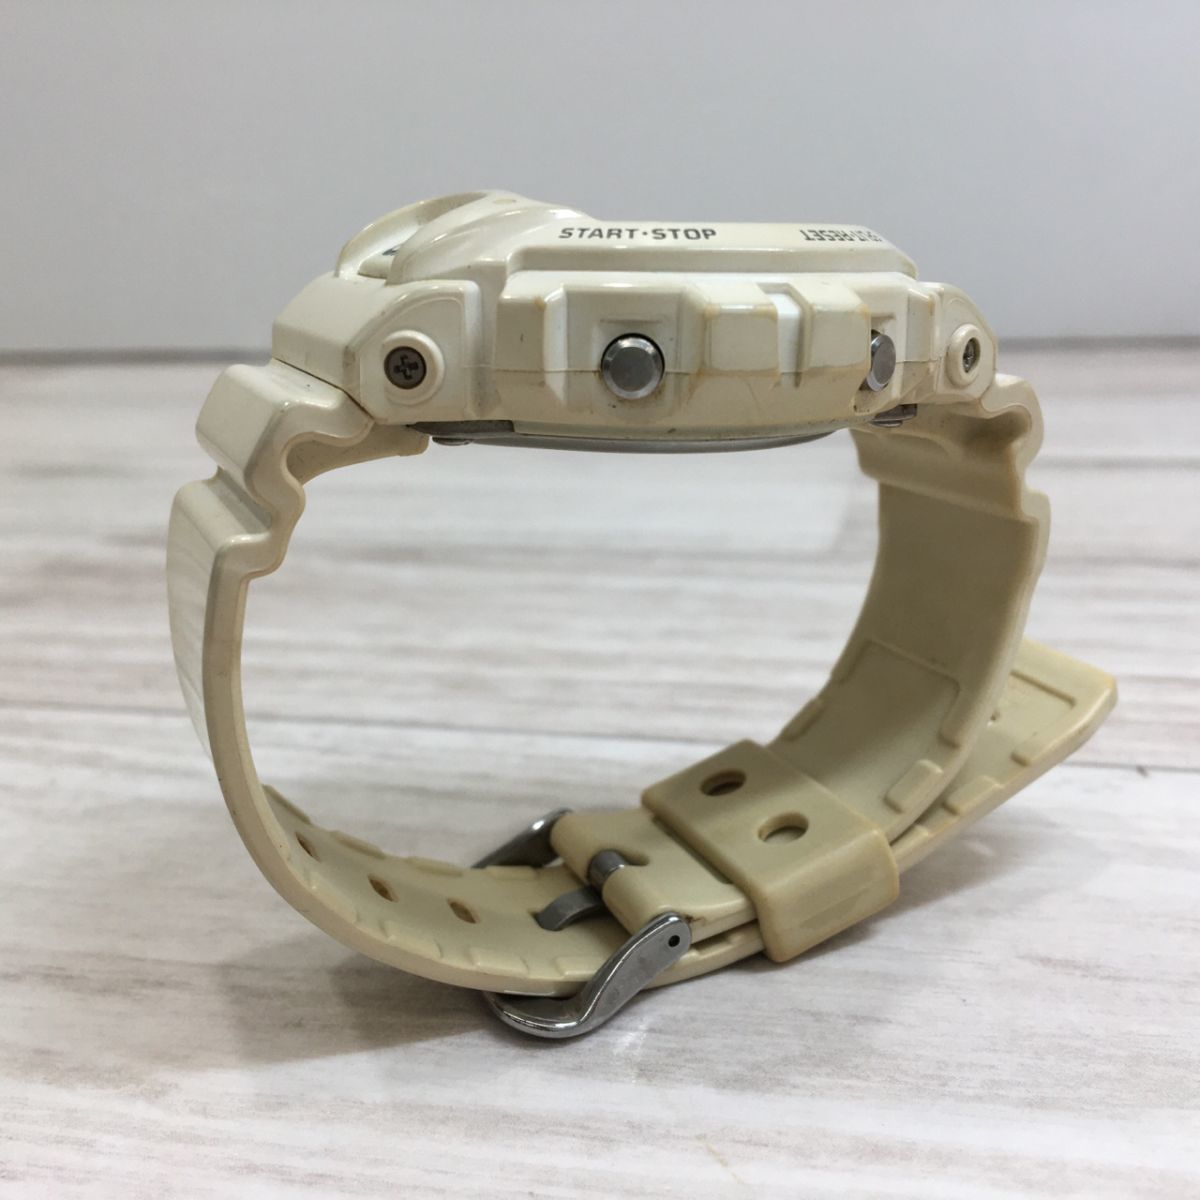 G-SHOCK Gショック 海外モデル 腕時計 L8410 GB-6900AB 稼働品